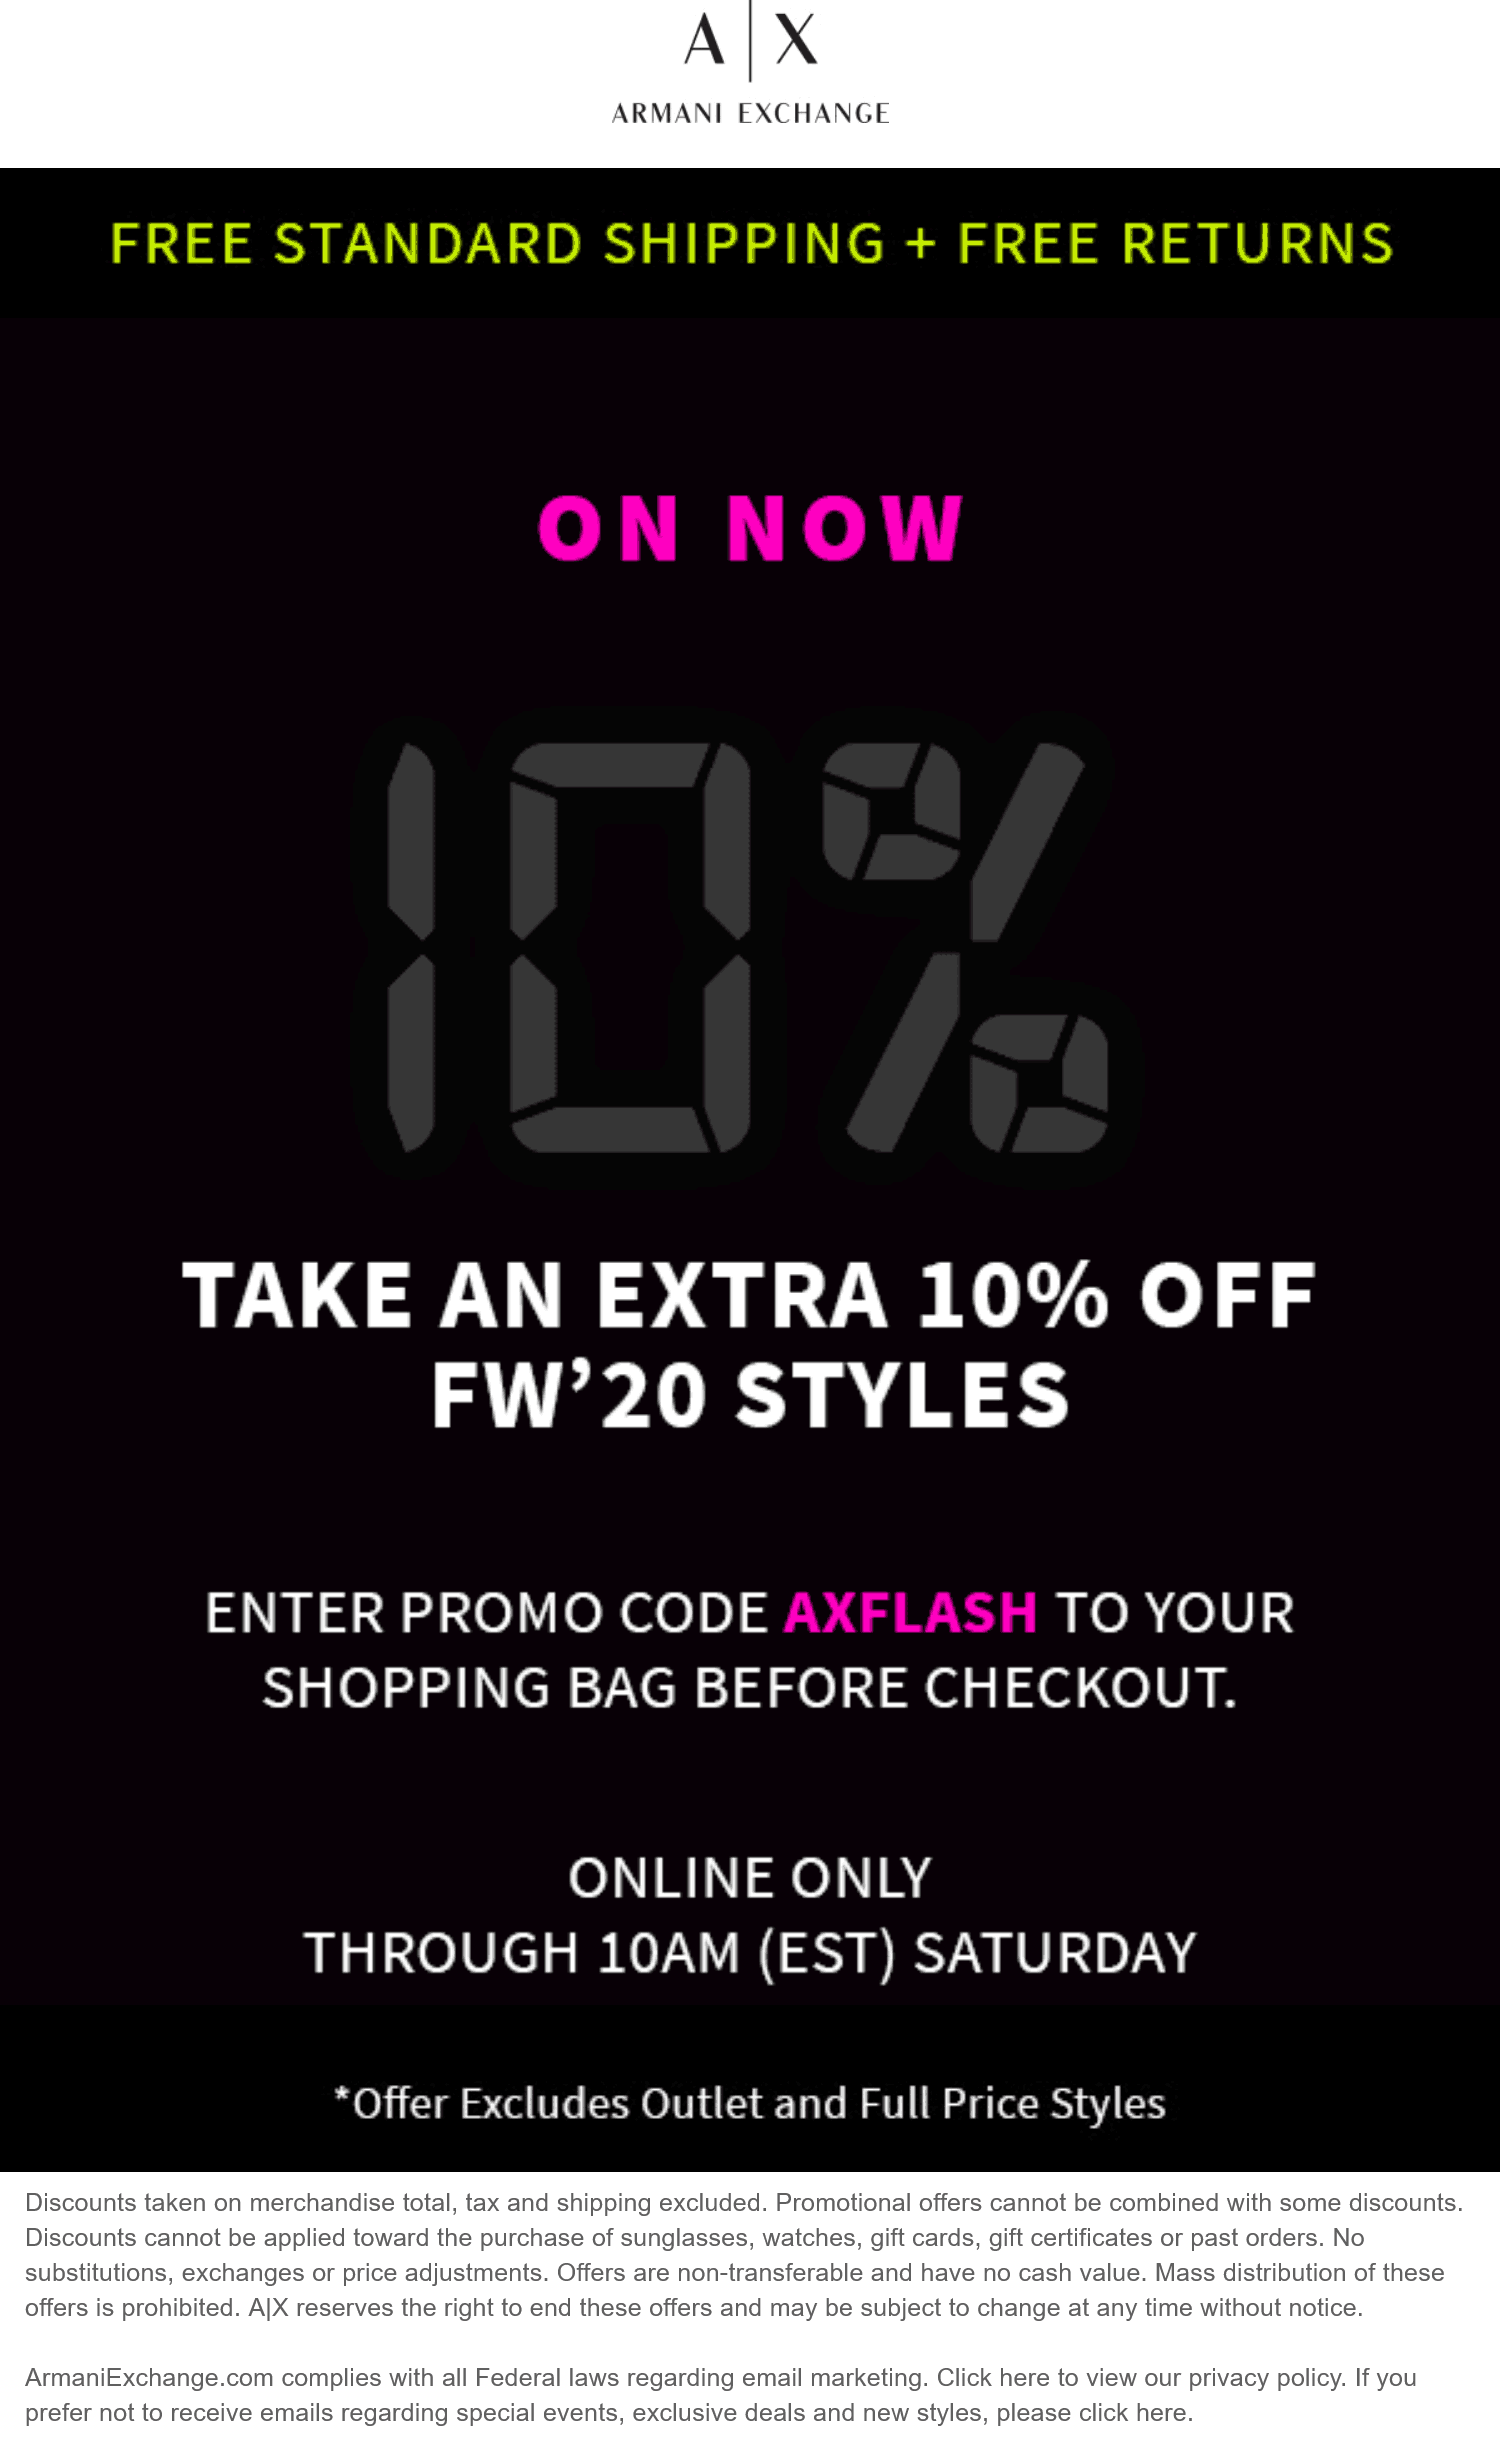 Armani Exchange stores Coupon  10% off online til 10a today at Armani Exchange via promo code AXFLASH #armaniexchange 